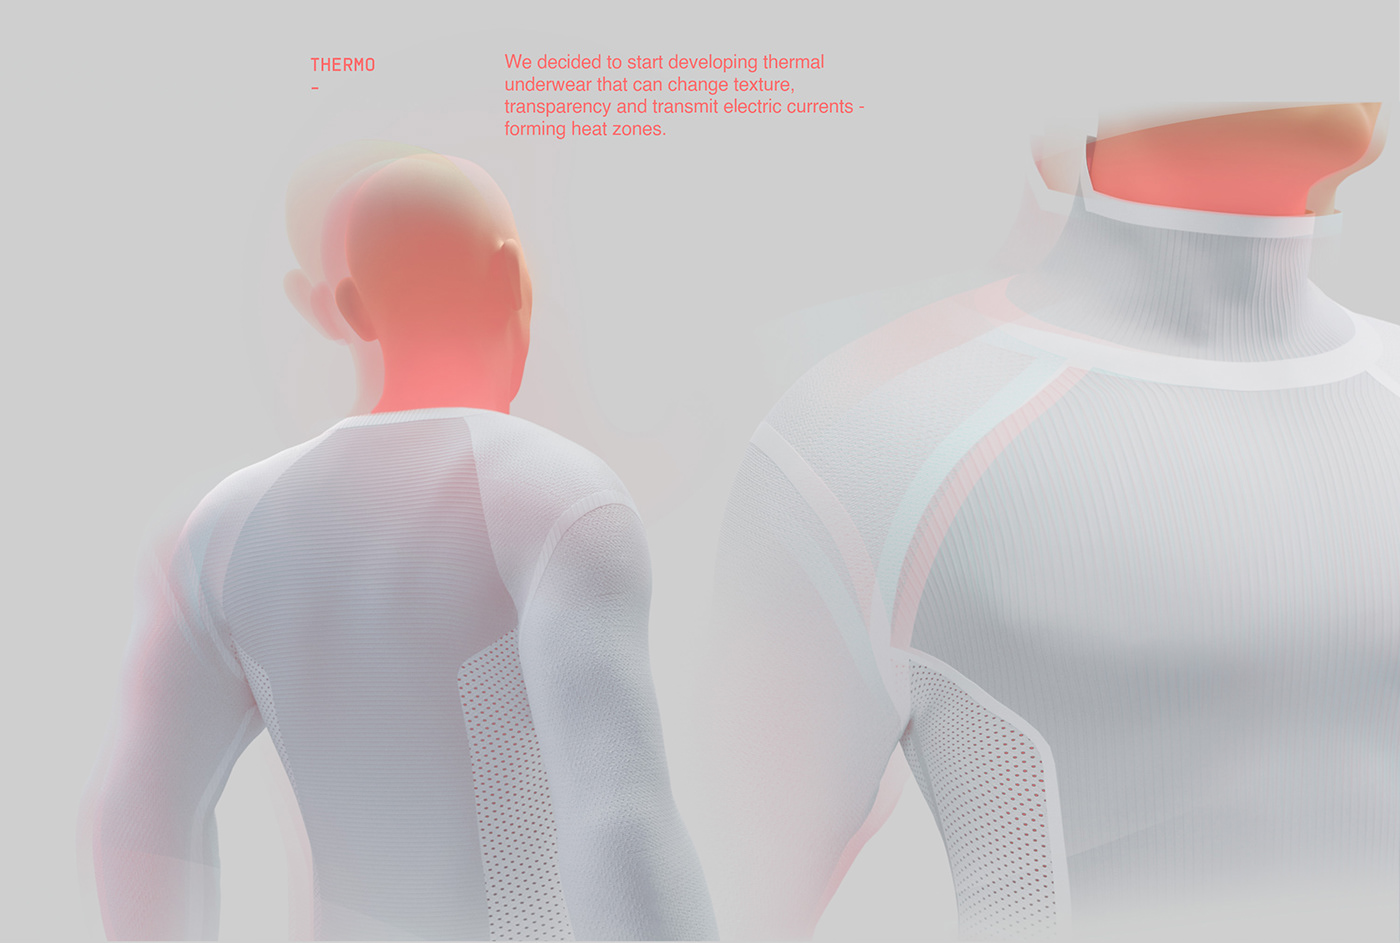 avatar Digital Avatar metaverse 3D Character Clothing clothing design concept art Character Character design  characterdesign